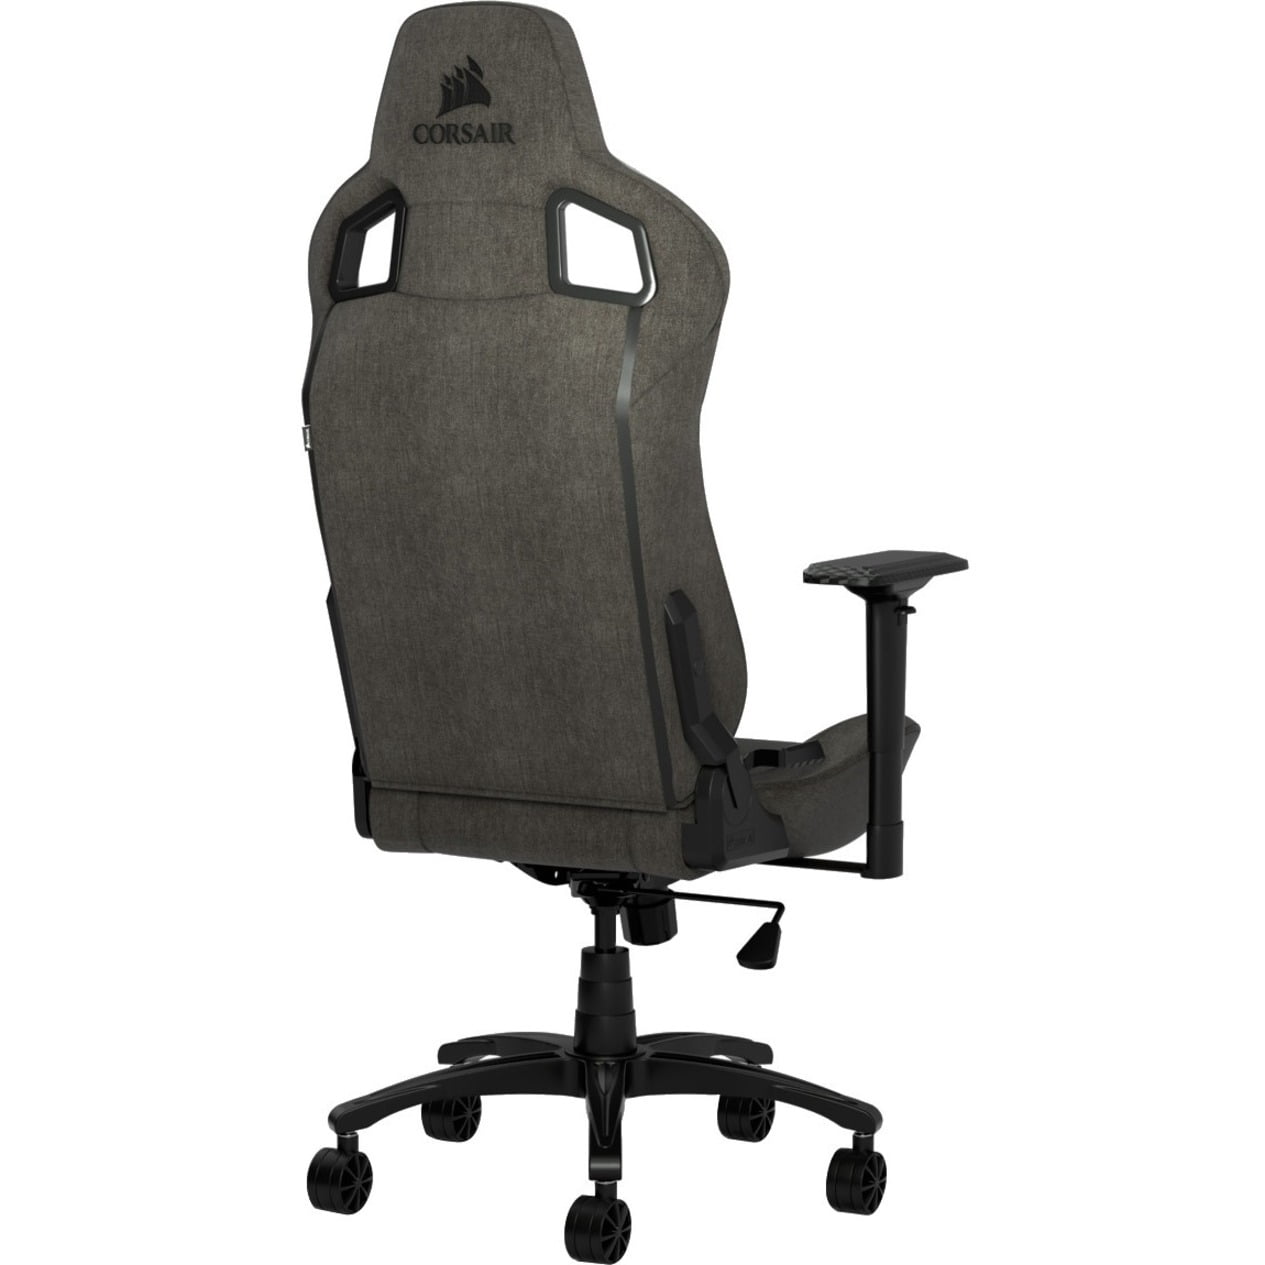 Corsair T3 RUSH Gaming Chair Charcoal - Walmart.com